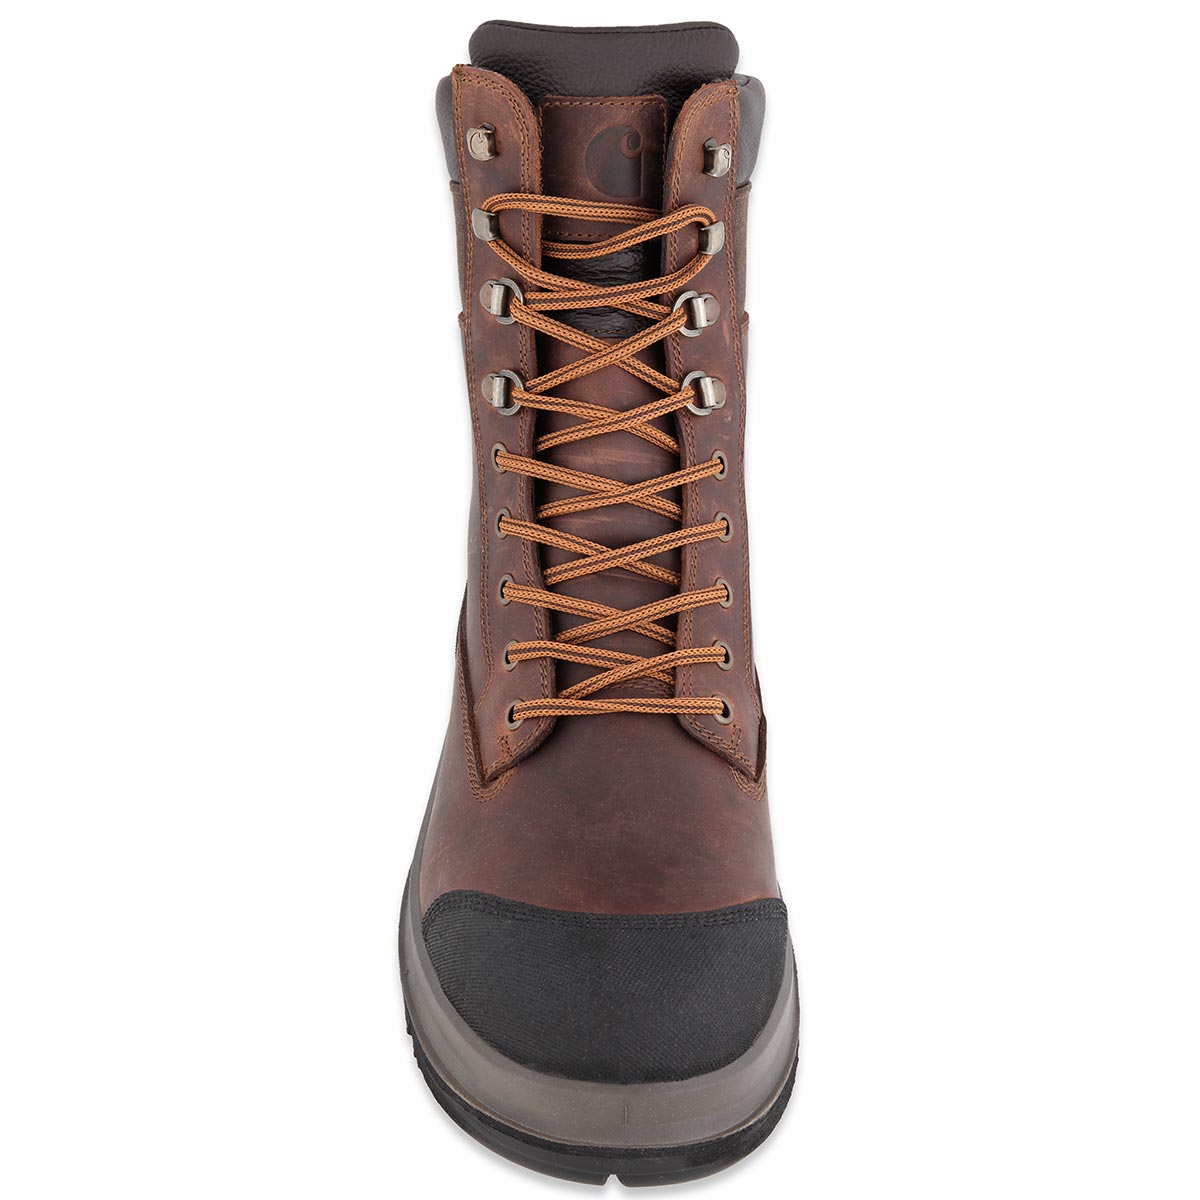 Carhartt Detroit Winter Work Boots S3 wasserdicht brown